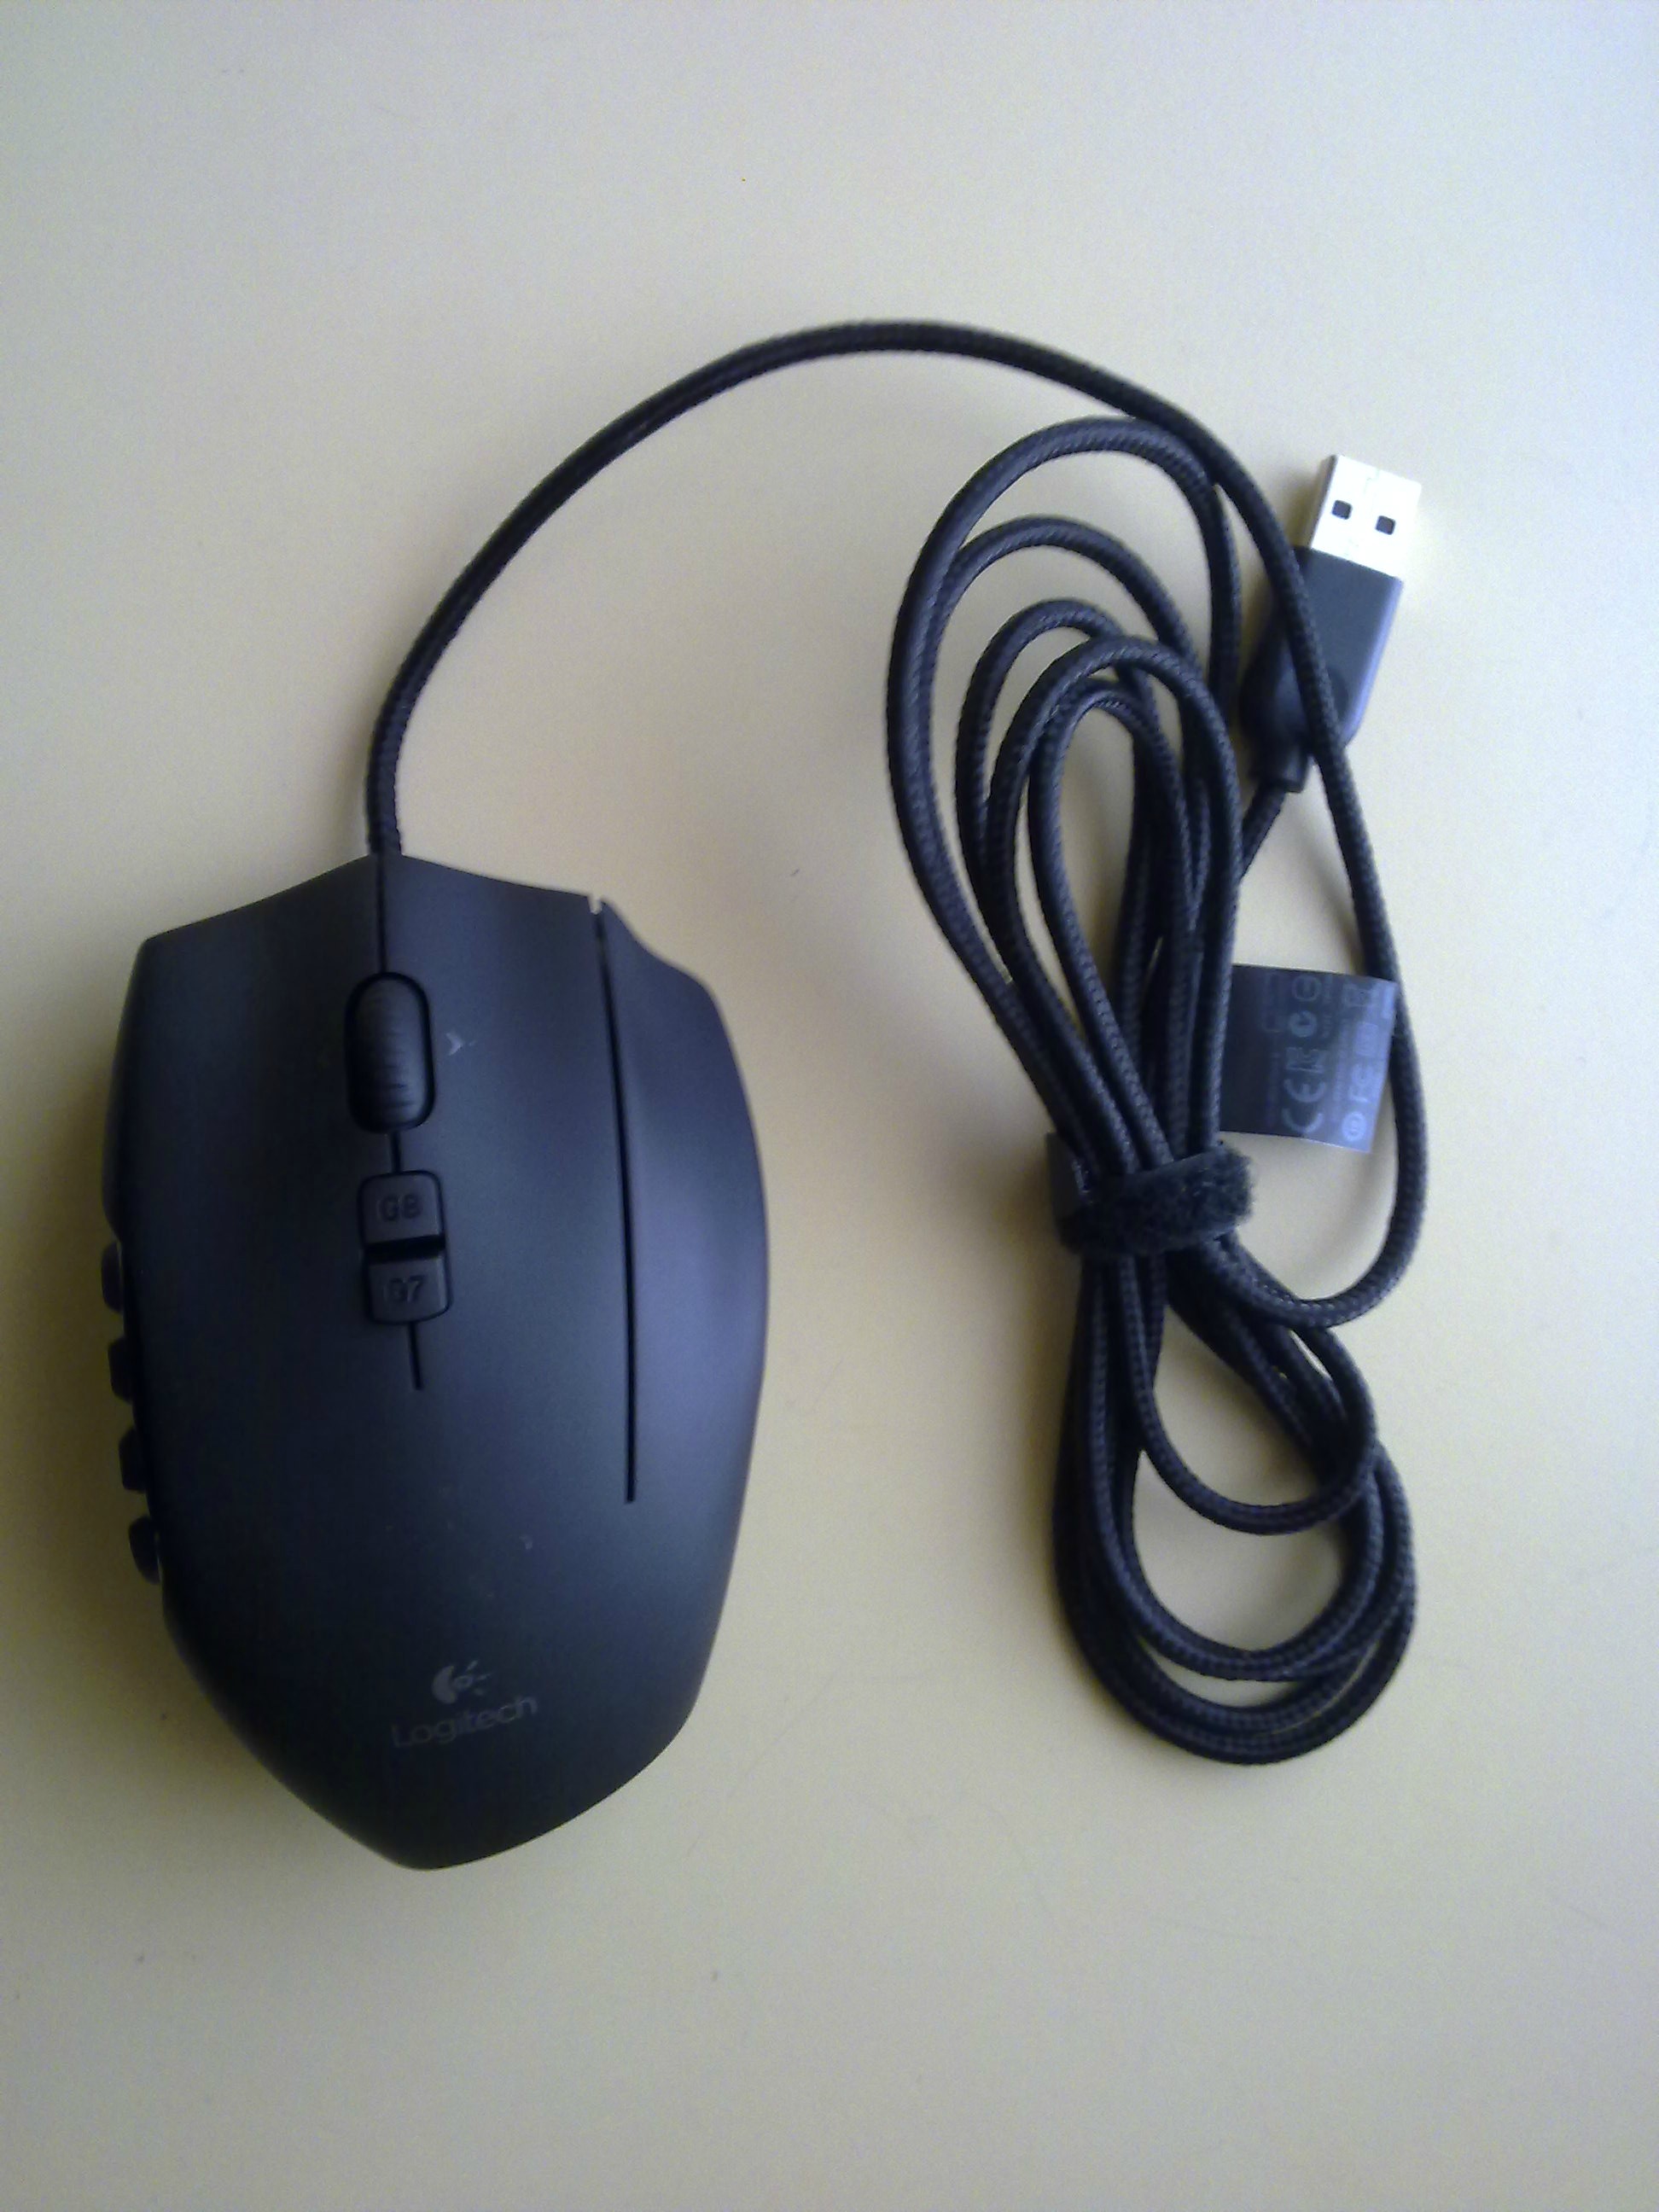  Logitech G600 MMO Gaming Mouse İncelemesi